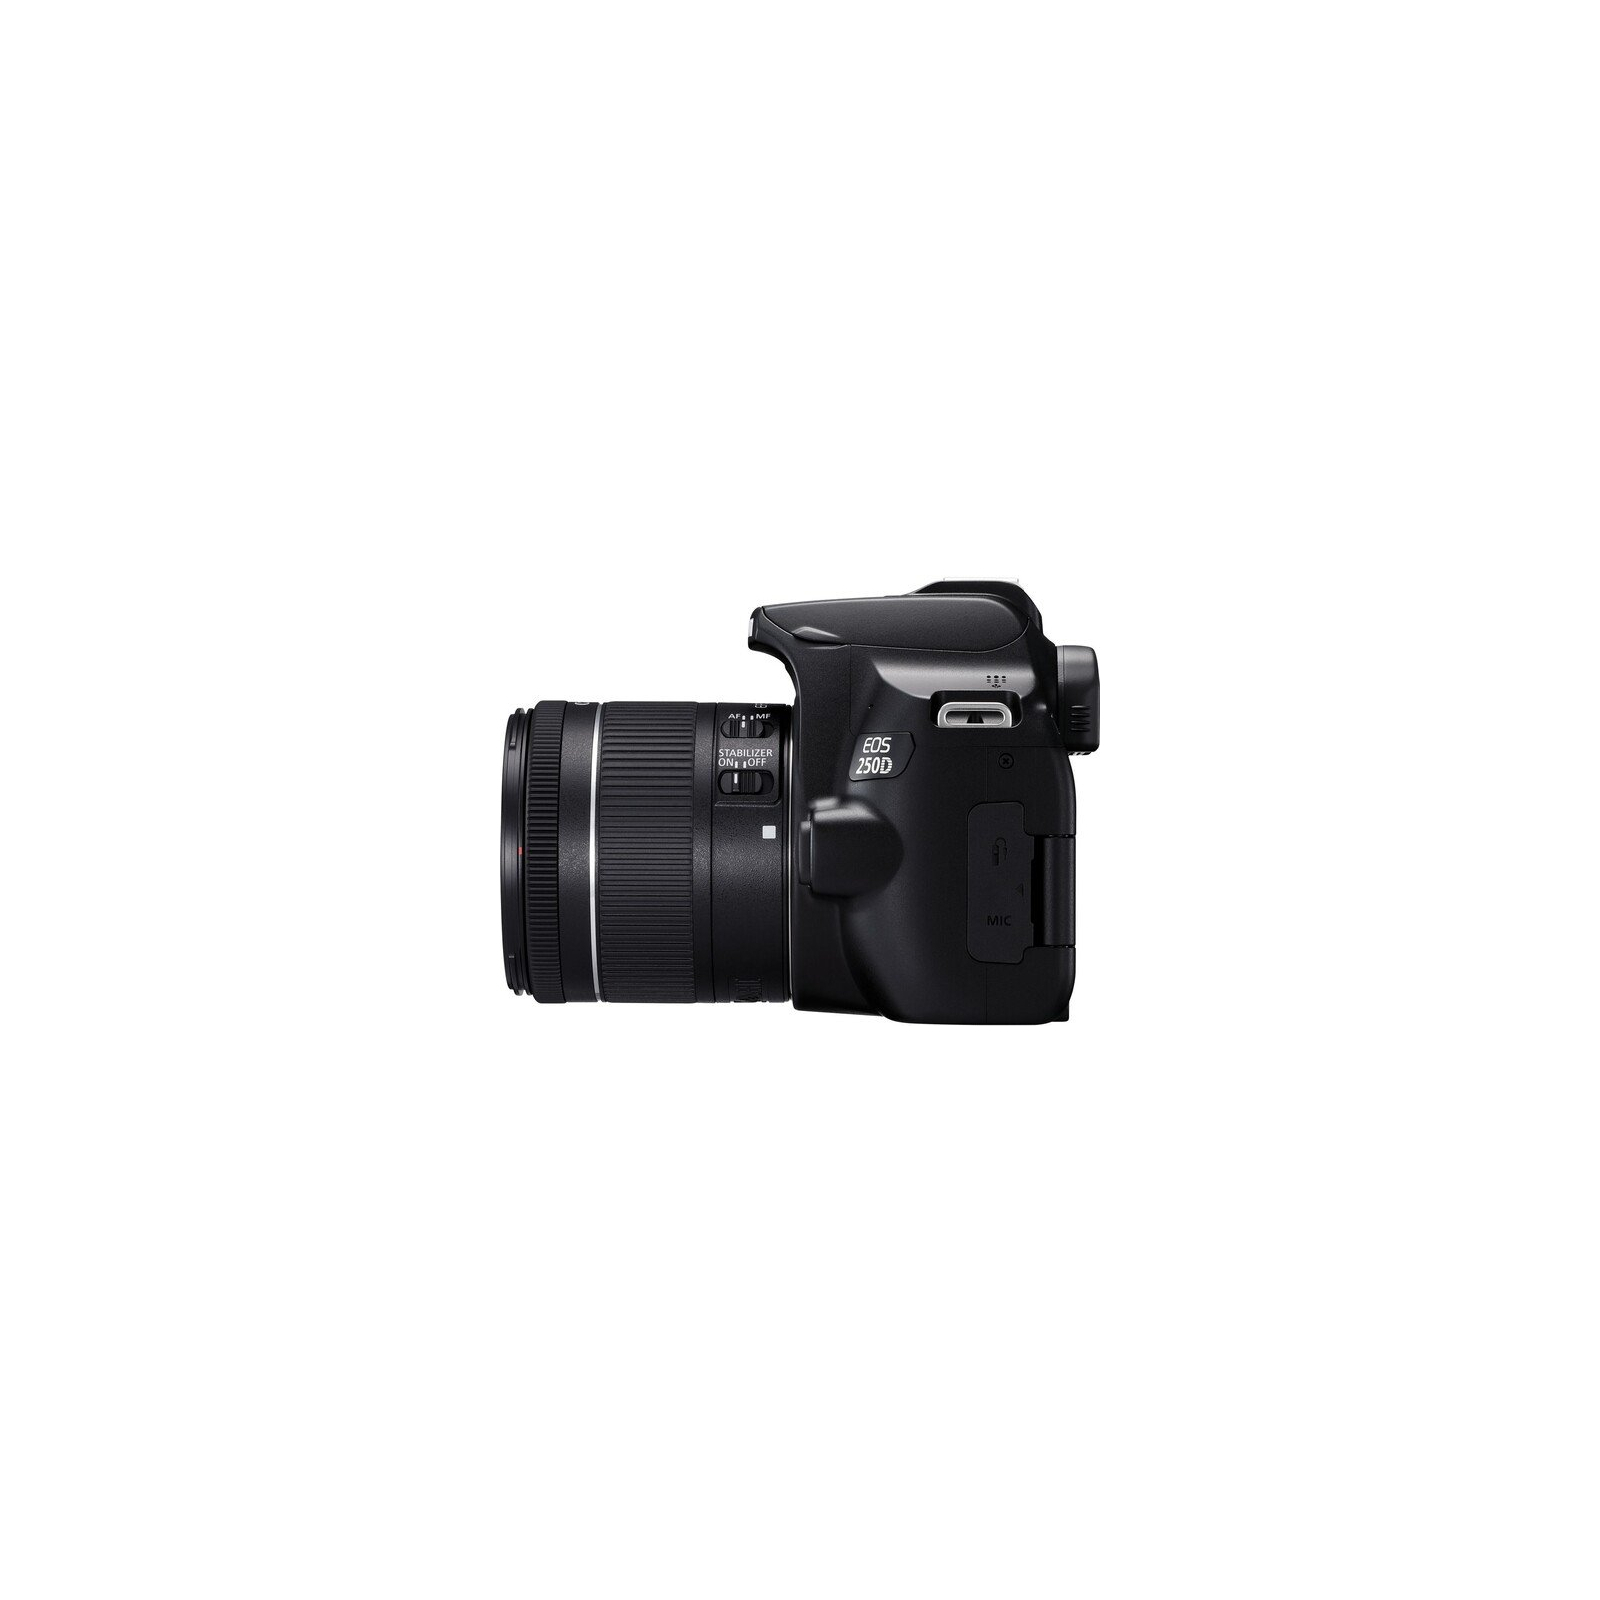 Цифровой фотоаппарат Canon EOS 250D kit 18-55 IS STM Black (3454C007) изображение 9